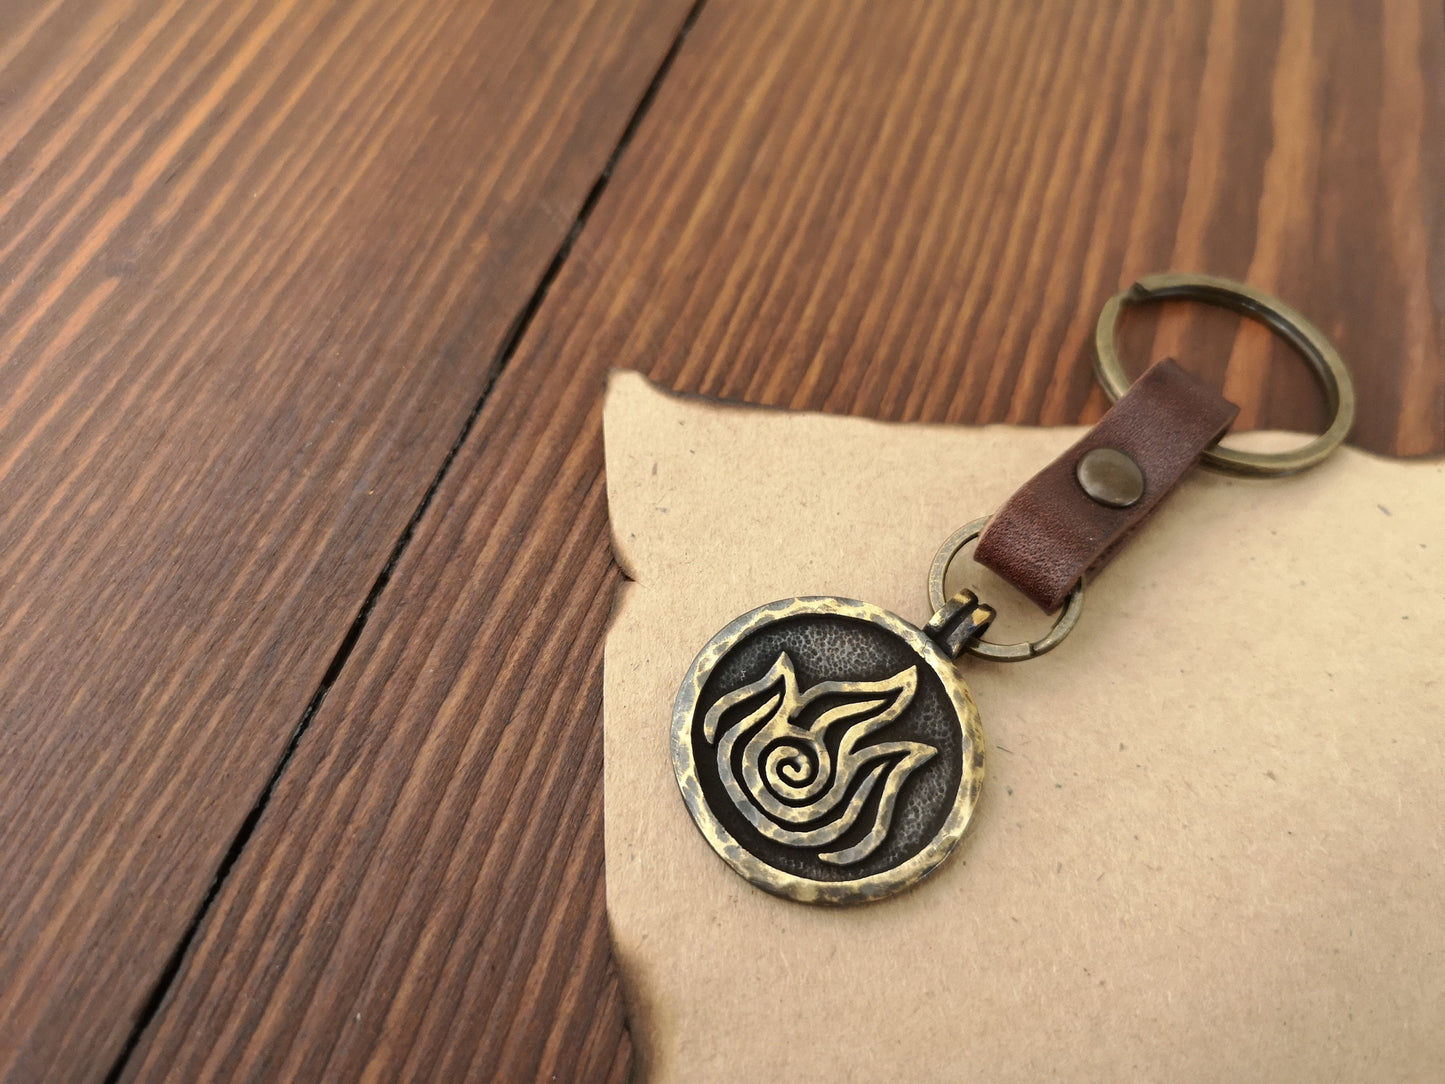 Avatar The Last Airbender Fire Nation Keychain Accessory Cosplay - Baldur Jewelry